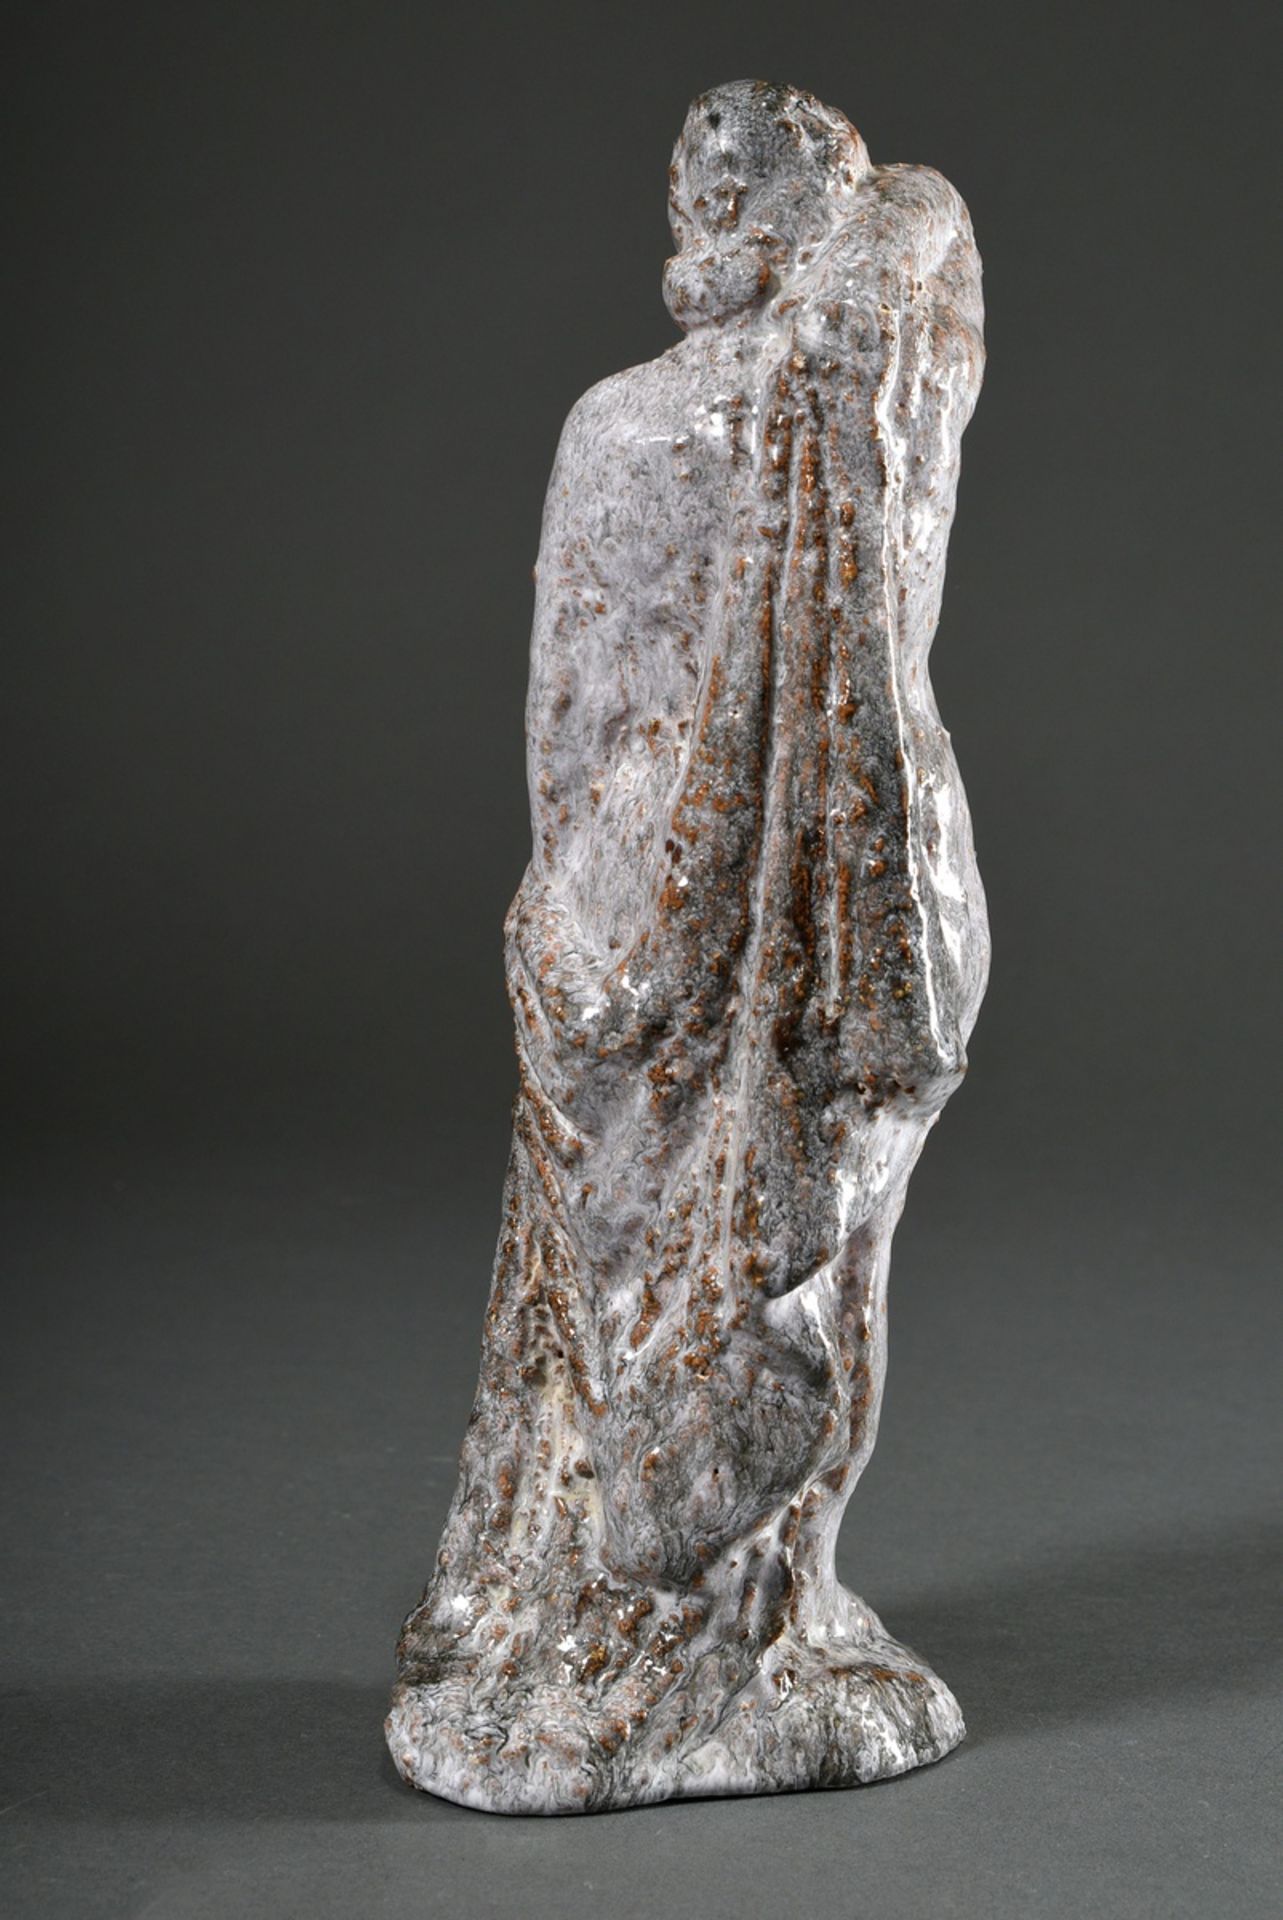 3 Various Maetzel, Monika (1917-2010) figures "Female nude with cloth", ceramic light glazed, 2x in - Image 6 of 7